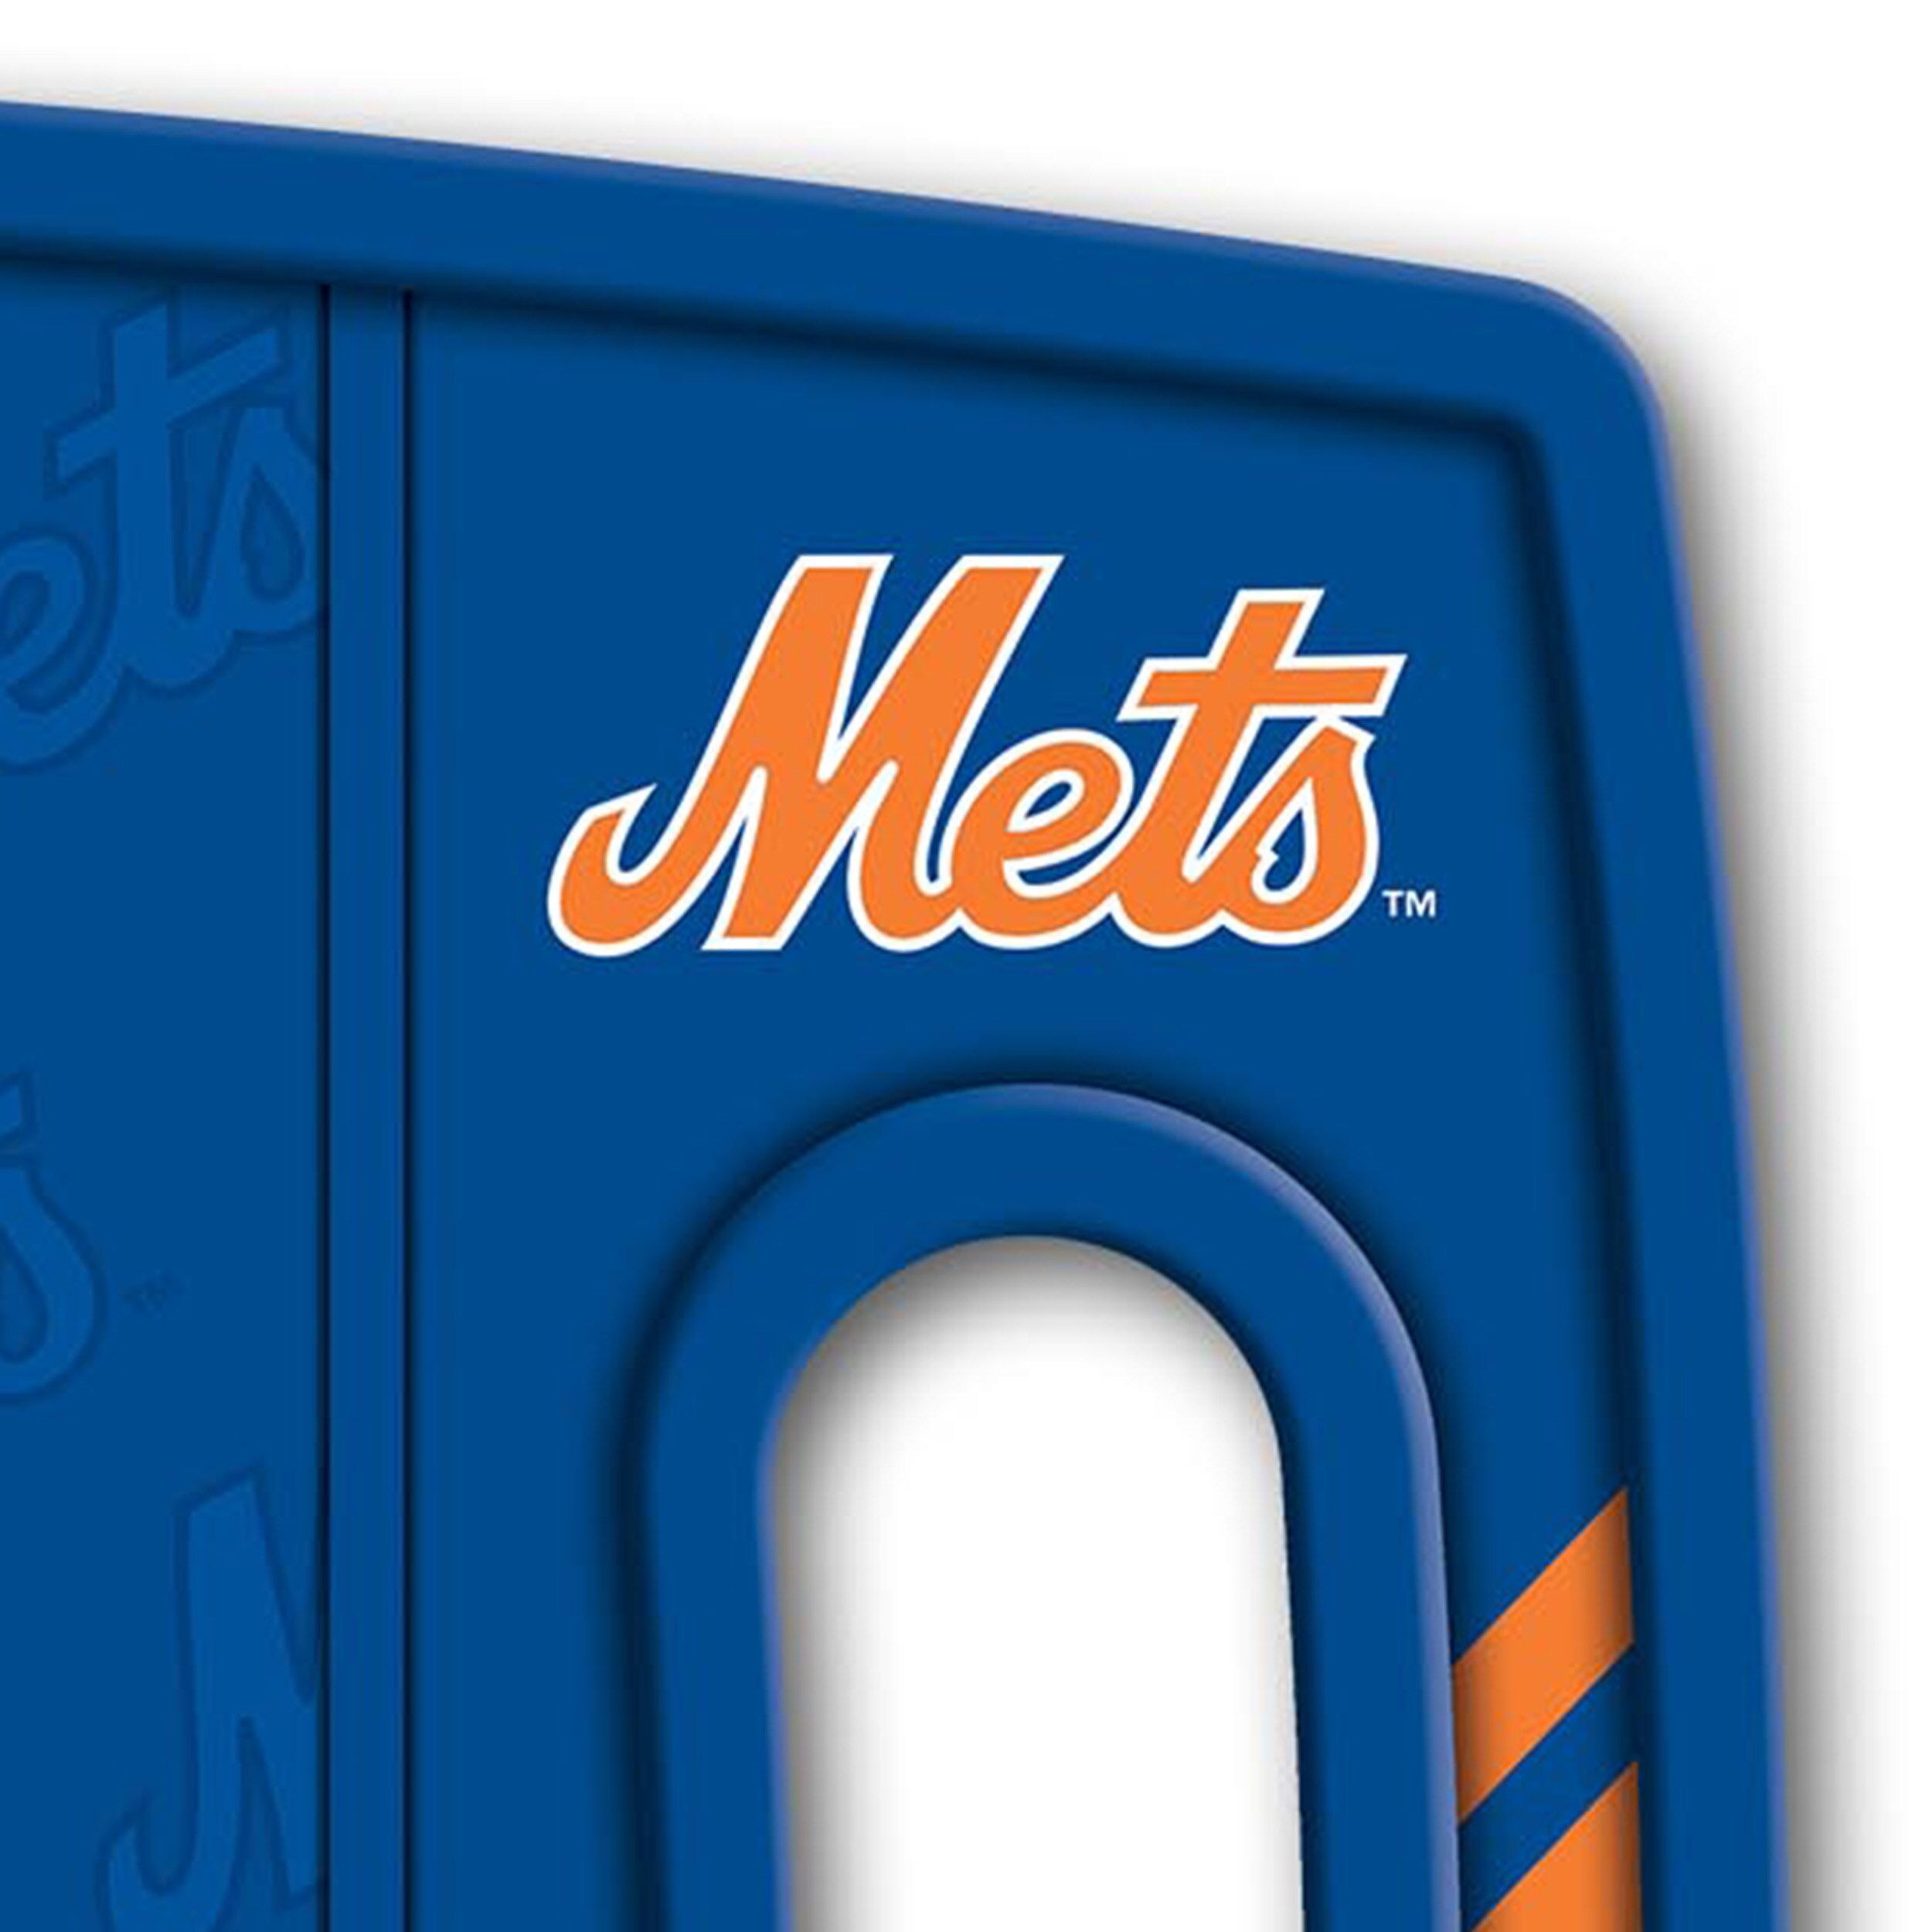 New York Mets Team Jersey Cutting Board